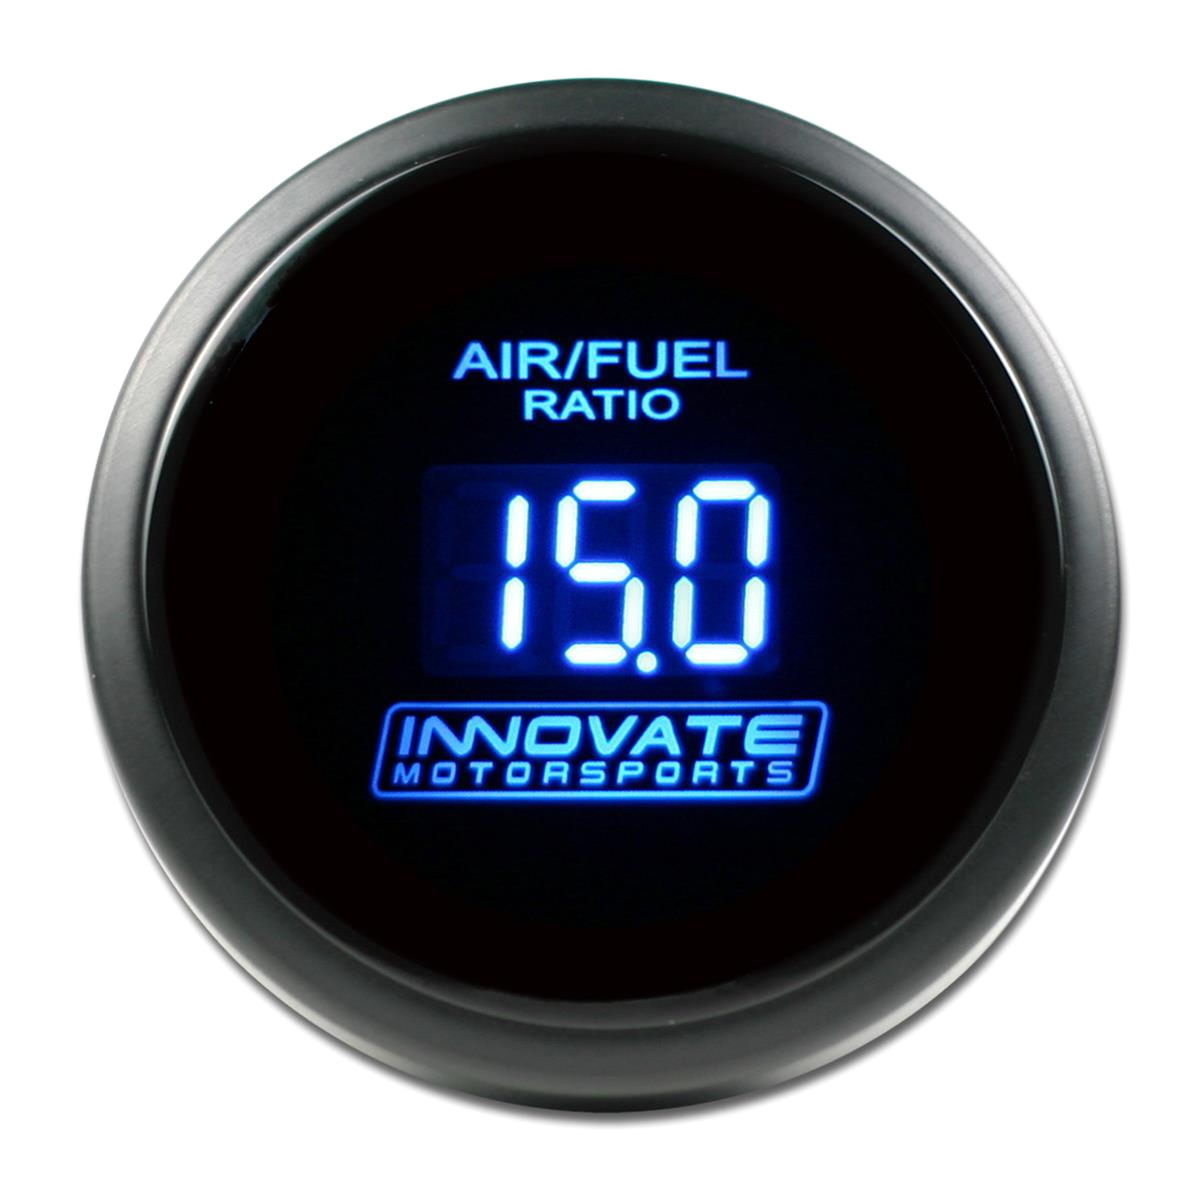 Innovate Motorsports 37930 Air-Fuel Ratio Gauge, DB, Wideband, 8:1-18:1 AFR, Electric, Digital, 2-1/16 in Diameter, Black Face Blue LED, Gauge Only, Each